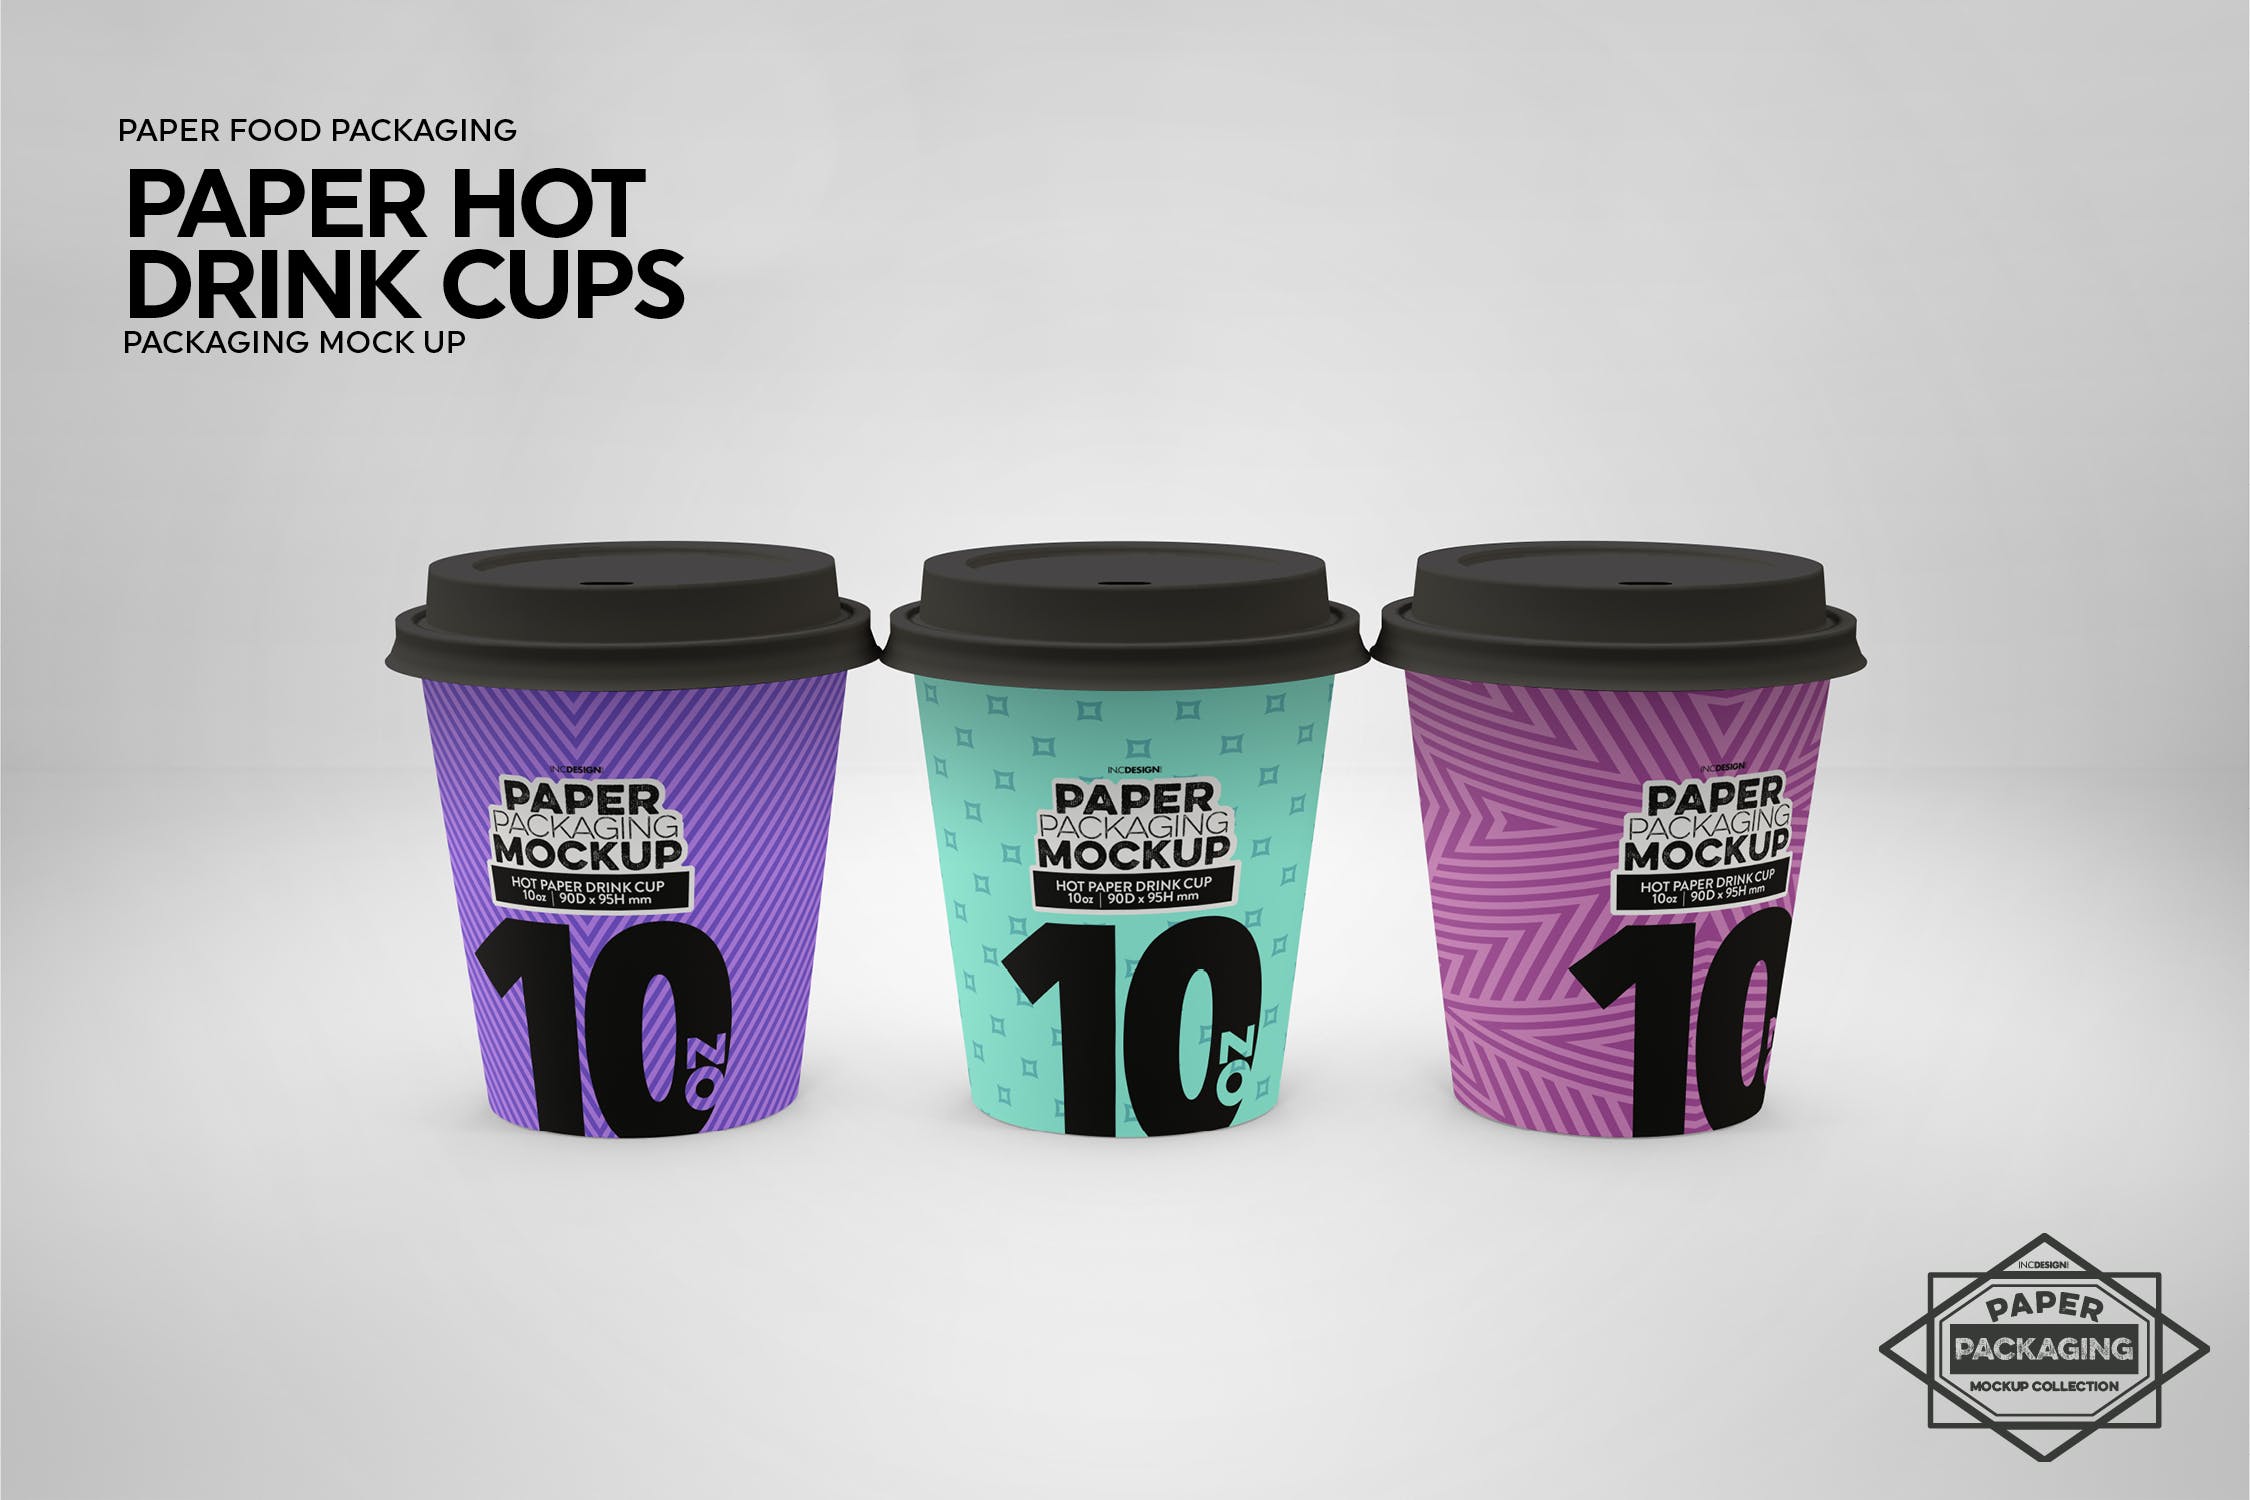 热饮一次性纸杯外观设计16图库精选 Paper Hot Drink Cups Packaging Mockup插图(12)